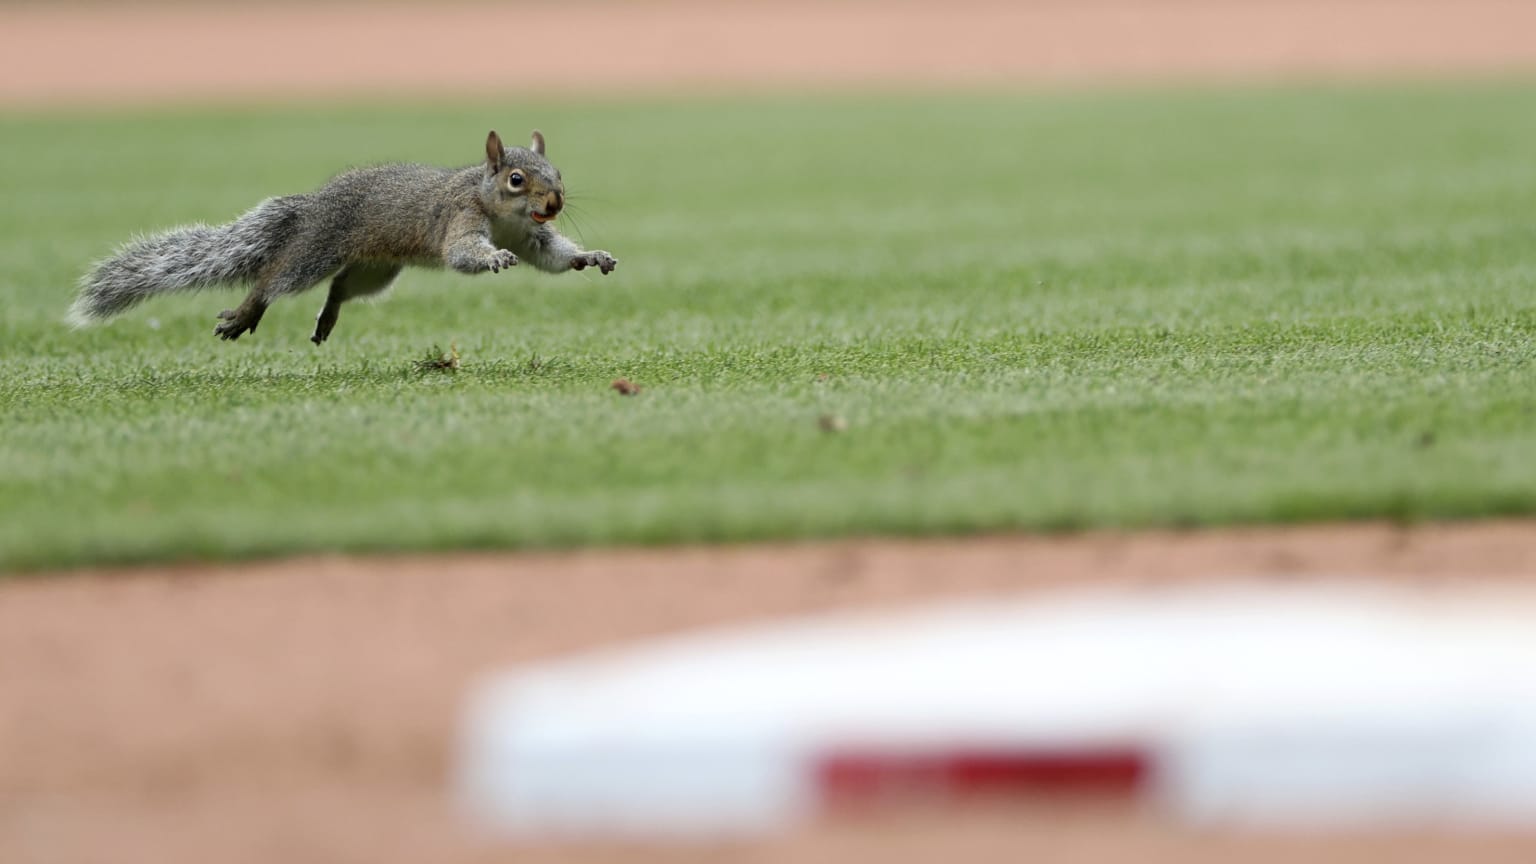 A squirrel runs across the field